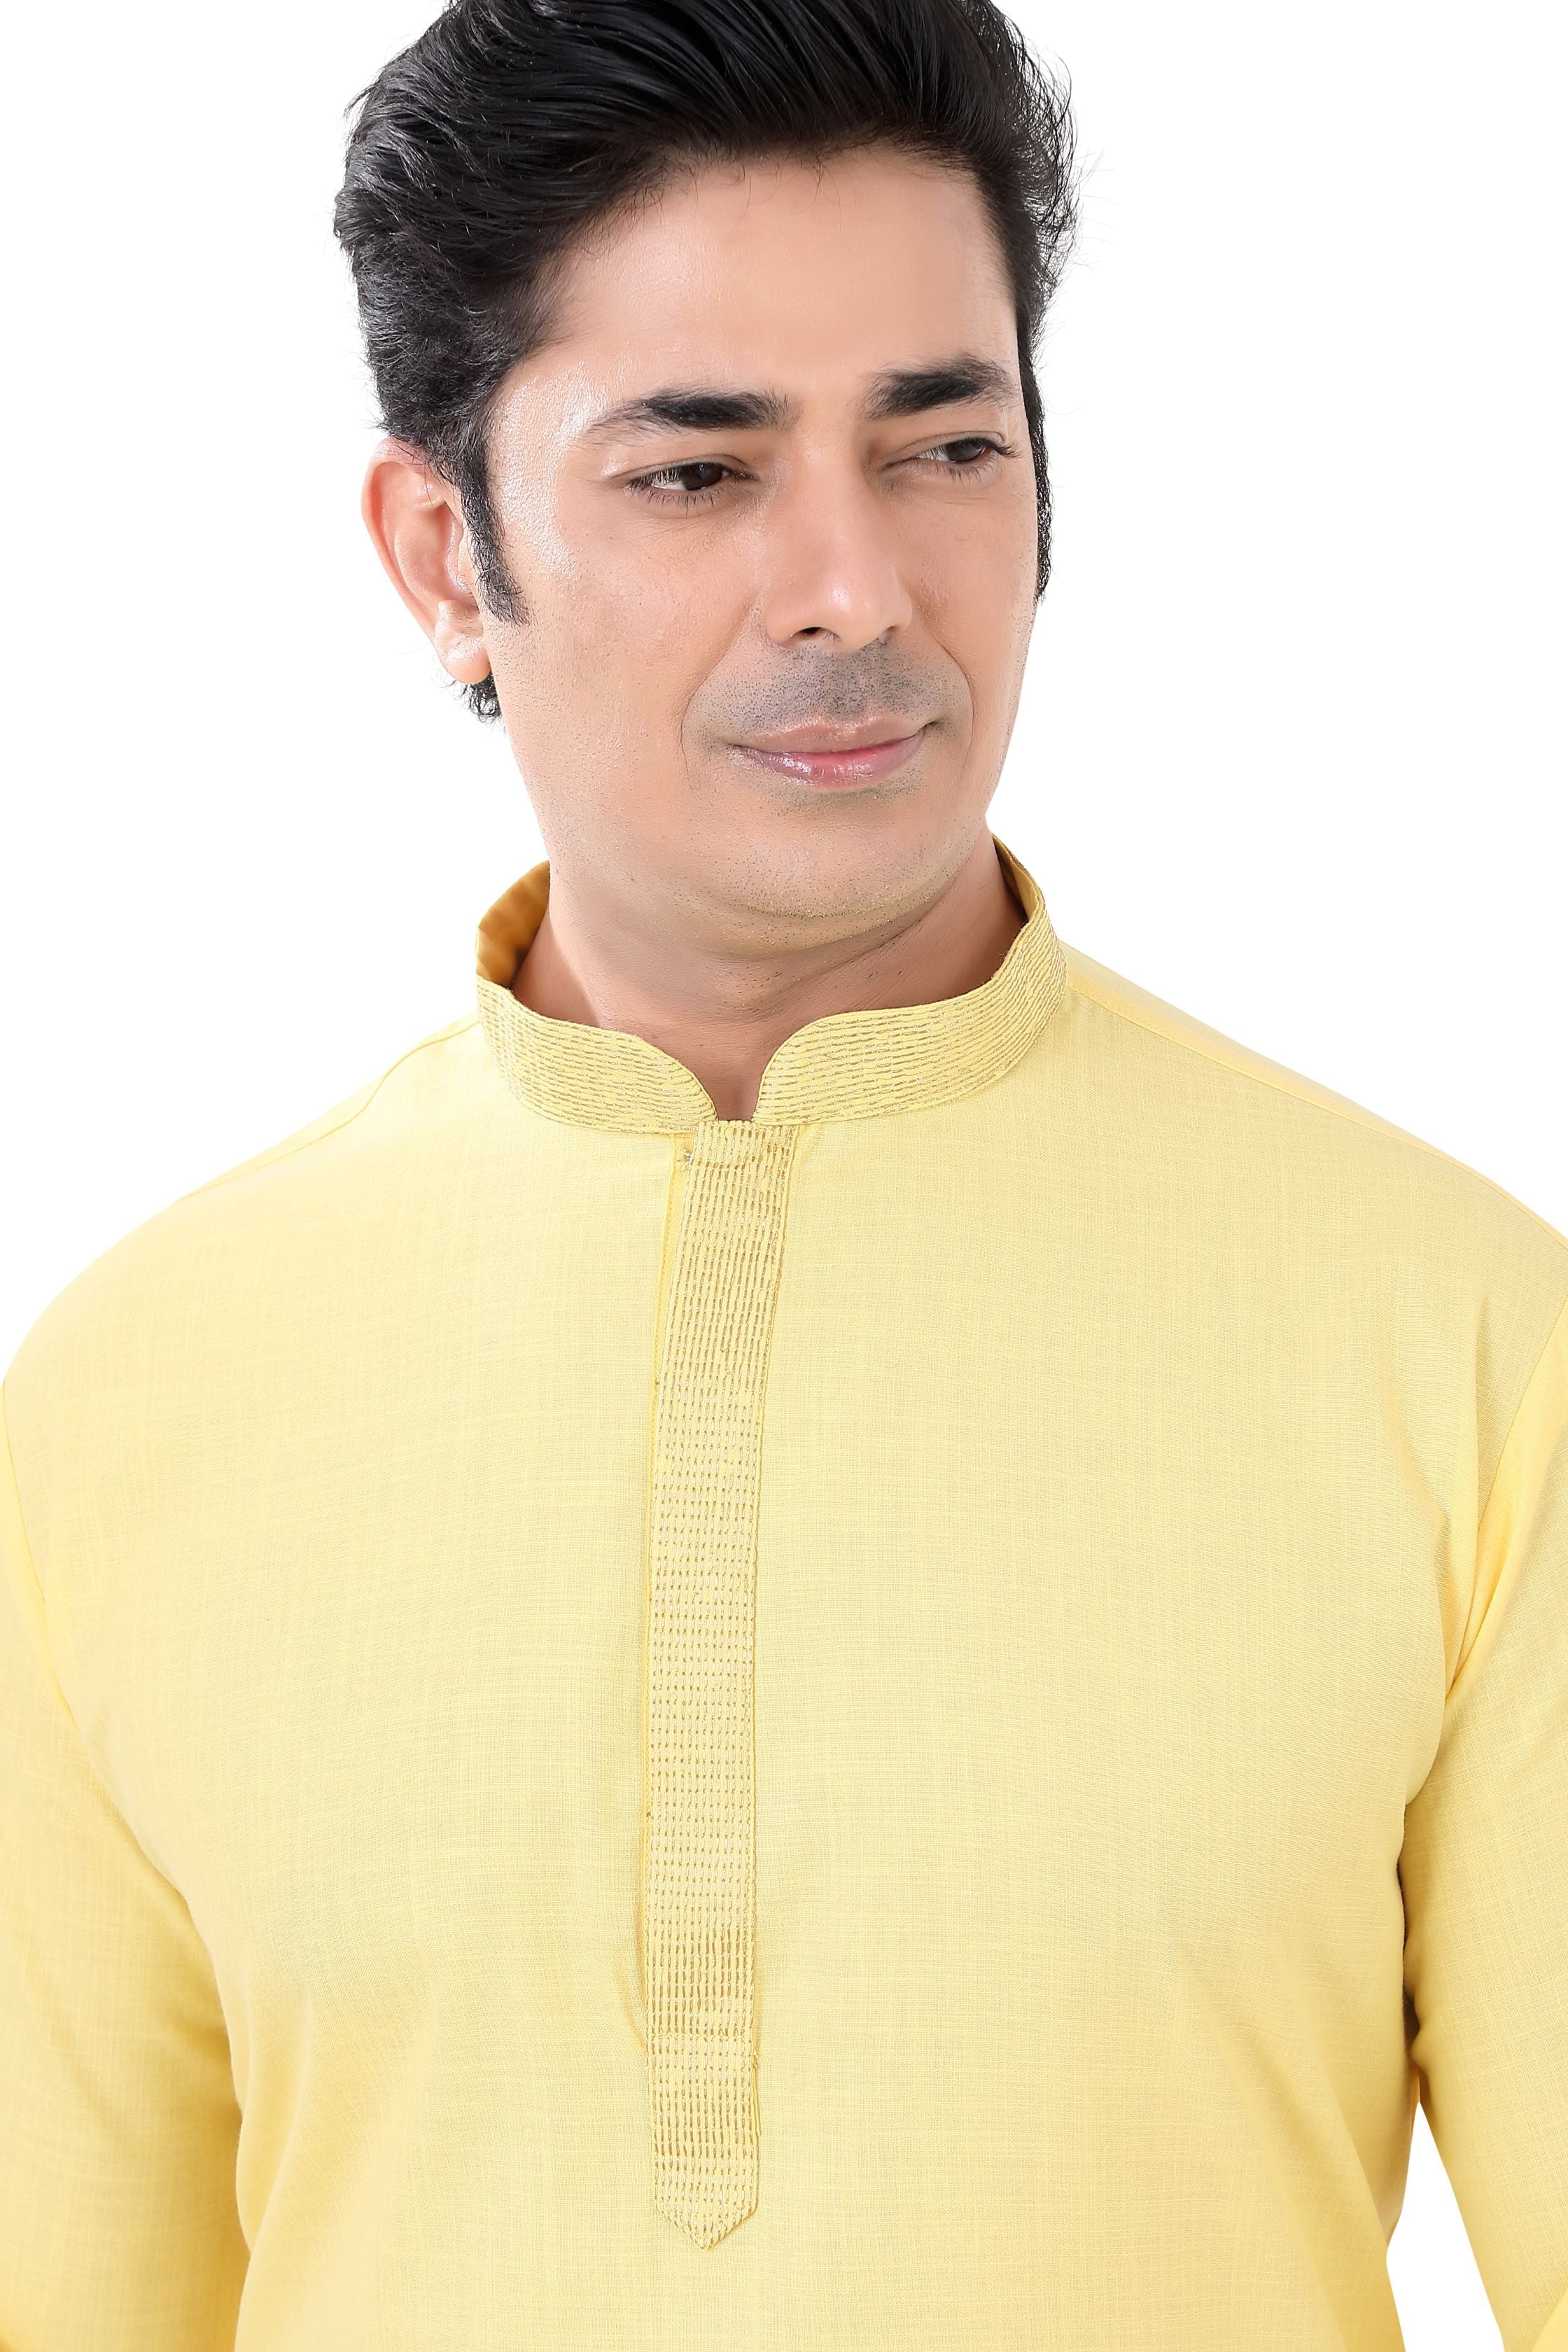 Cotton Anchor embroidery Kurta Pajama in Yellow Colour